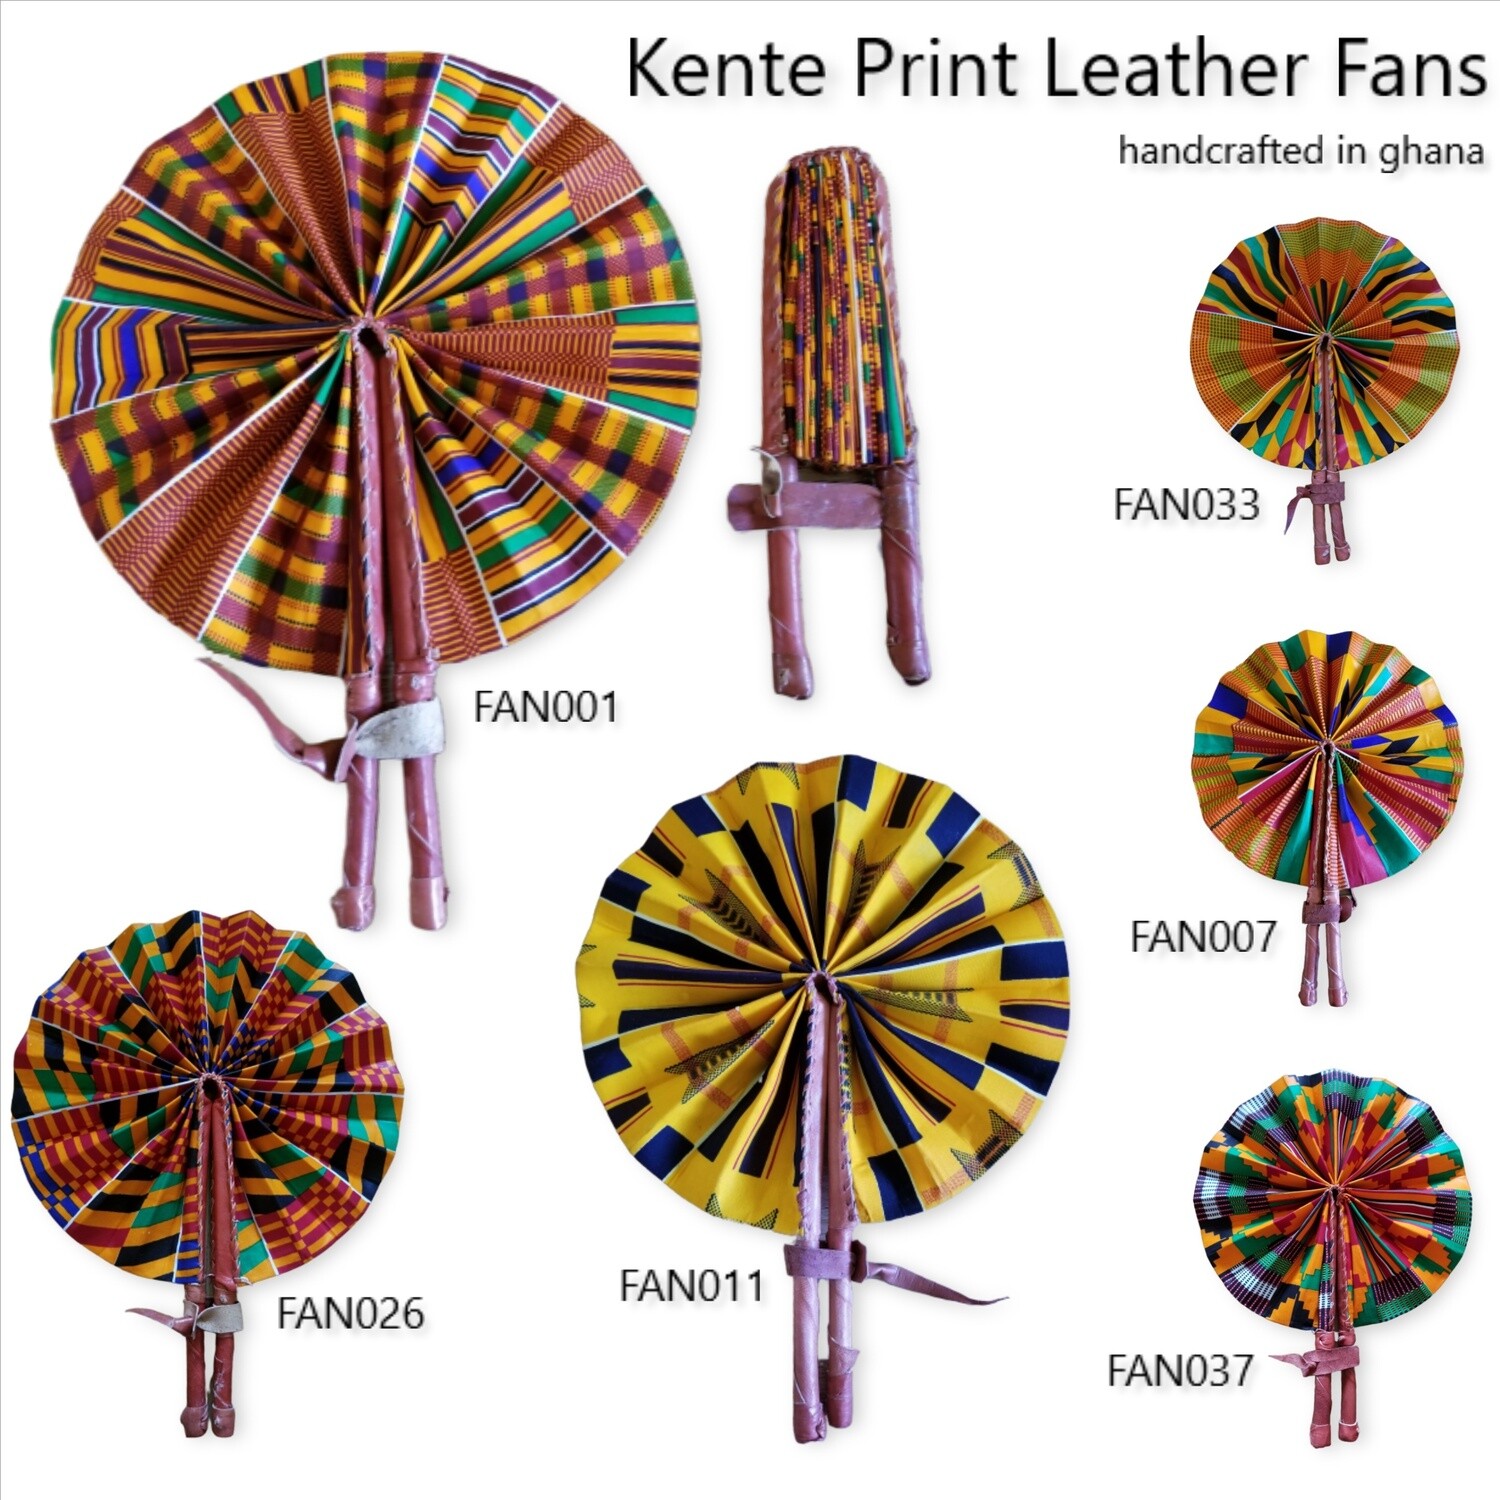 Kente Print Leather Fans